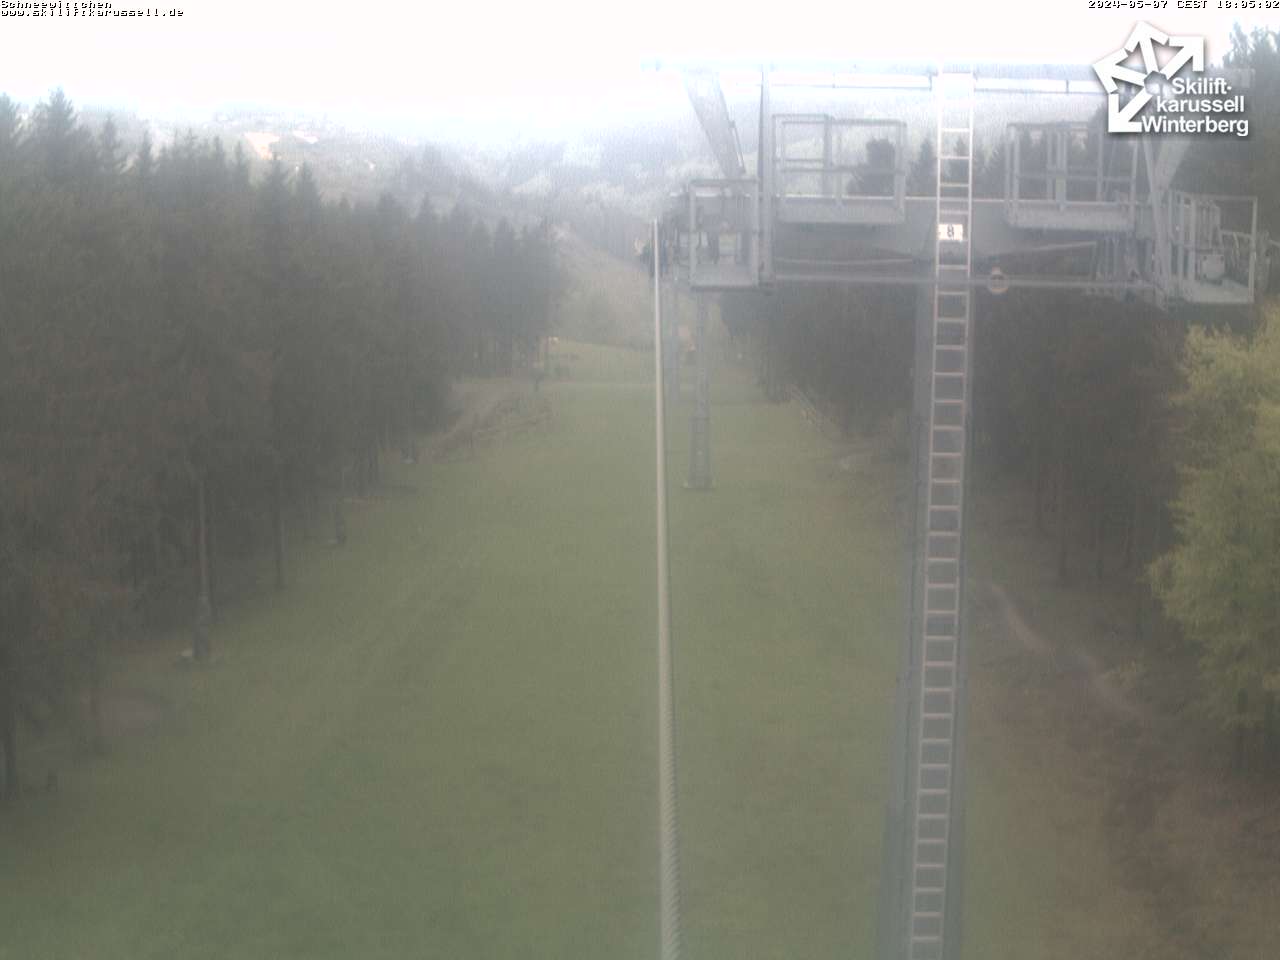 Webcam Schneewittchen - Skiliftkarussell Winterberg